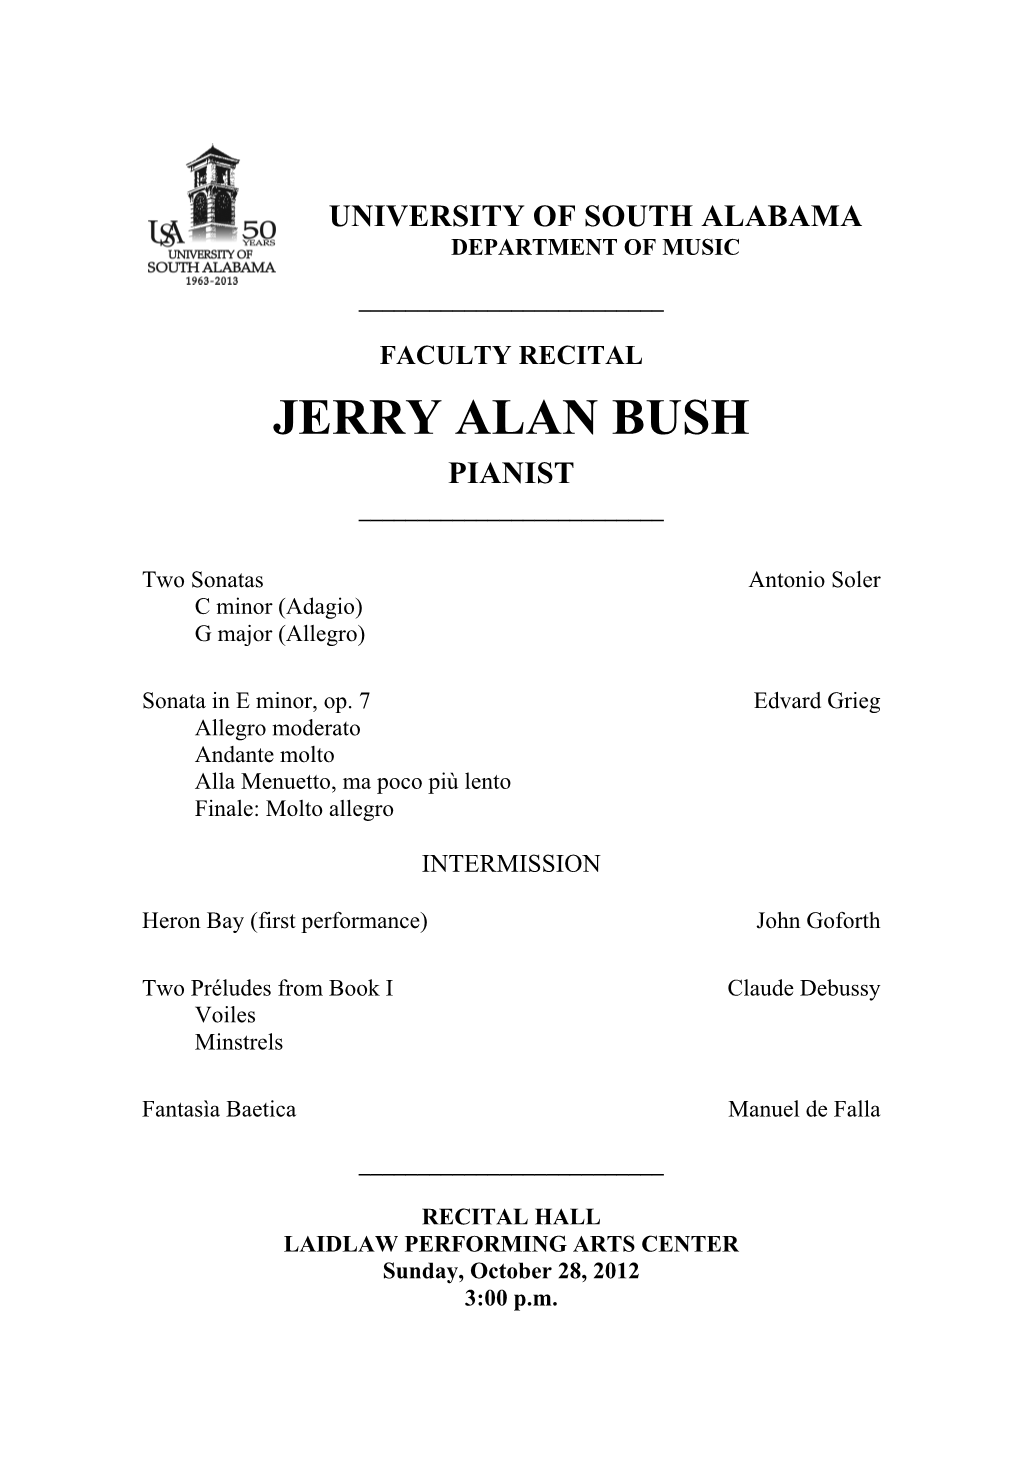 Jerry Alan Bush Pianist ______